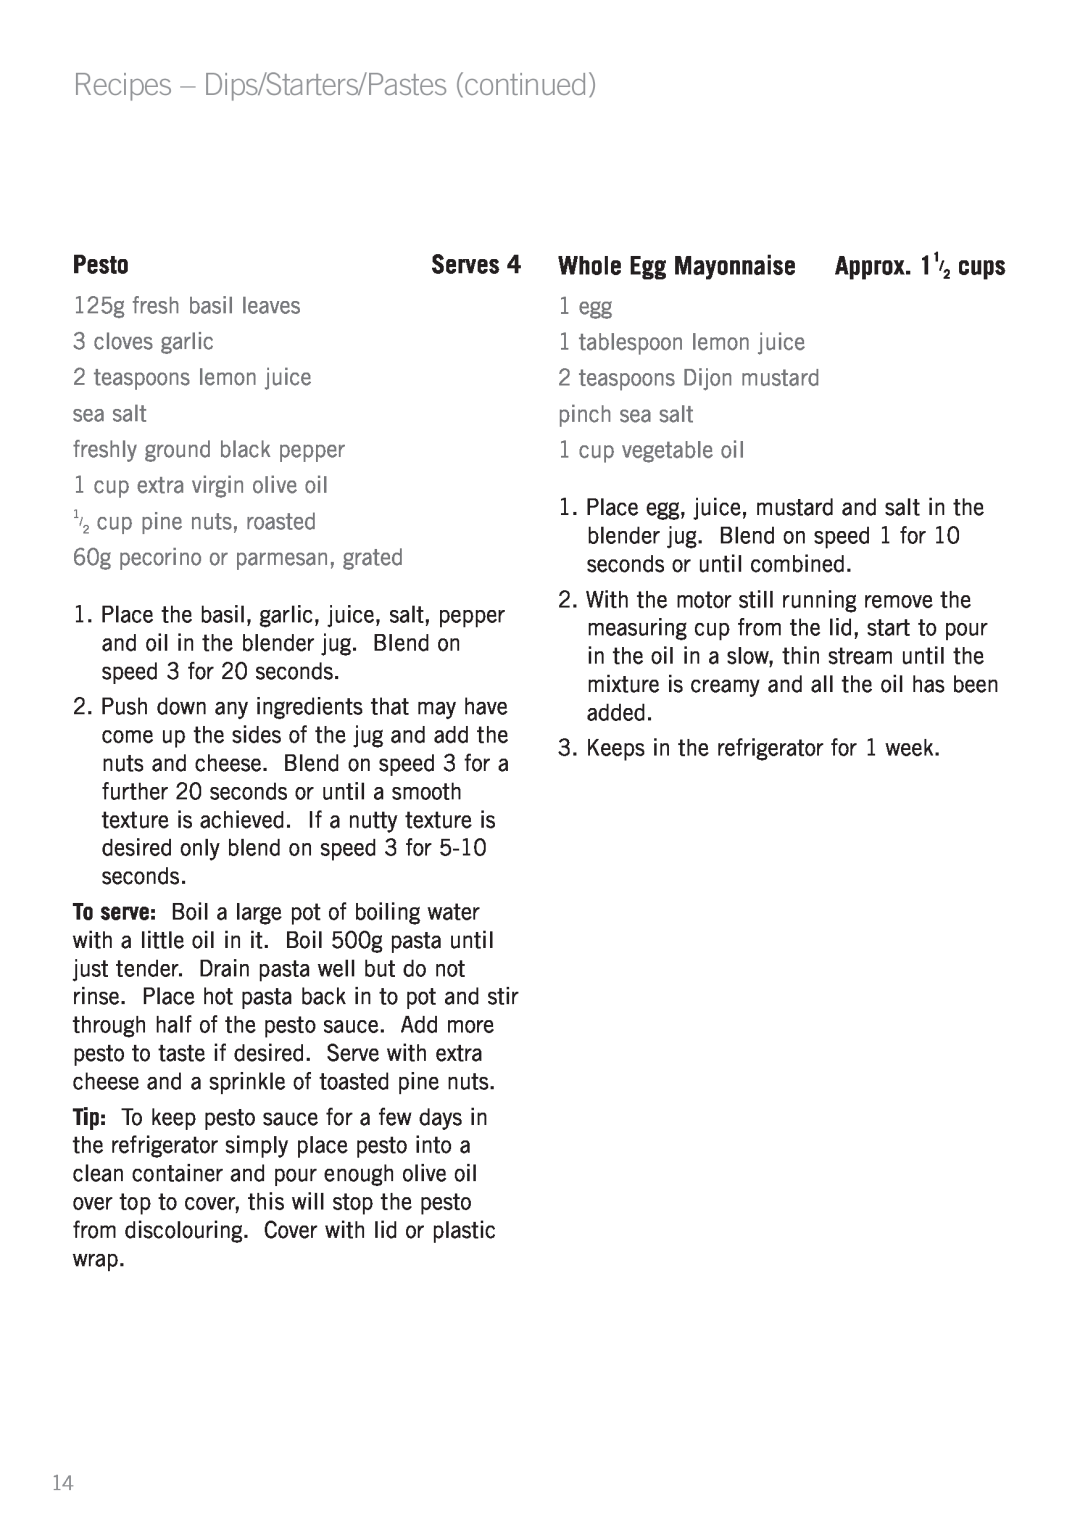 Sunbeam PB7610 manual Recipes - Dips/Starters/Pastes continued, Pesto 